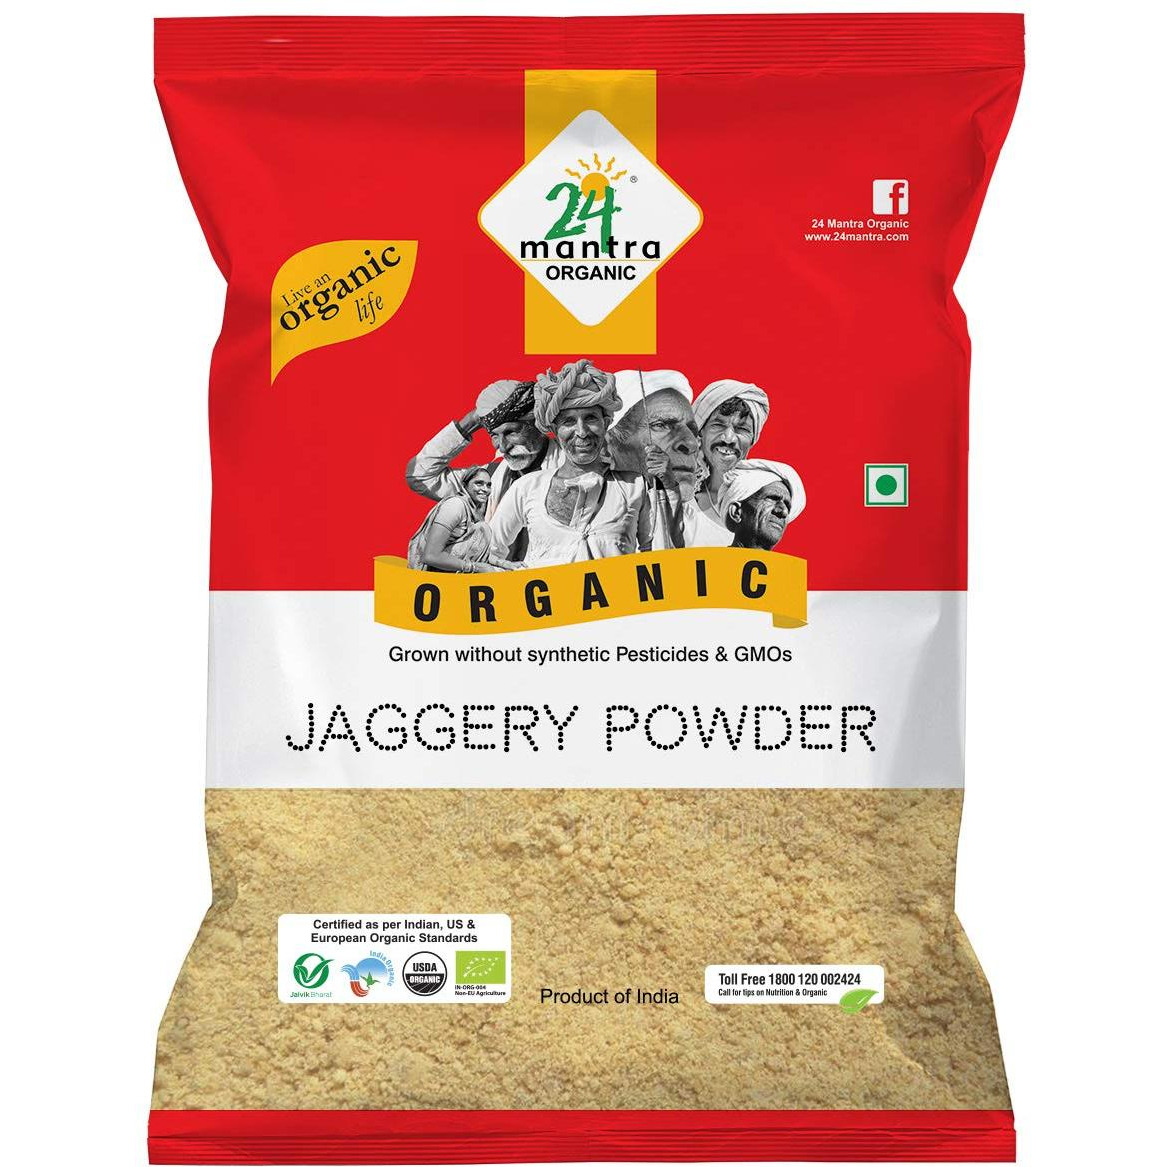 Case of 10 - 24 Mantra Organic Jaggery Powder - 2 Lb (907 Gm)